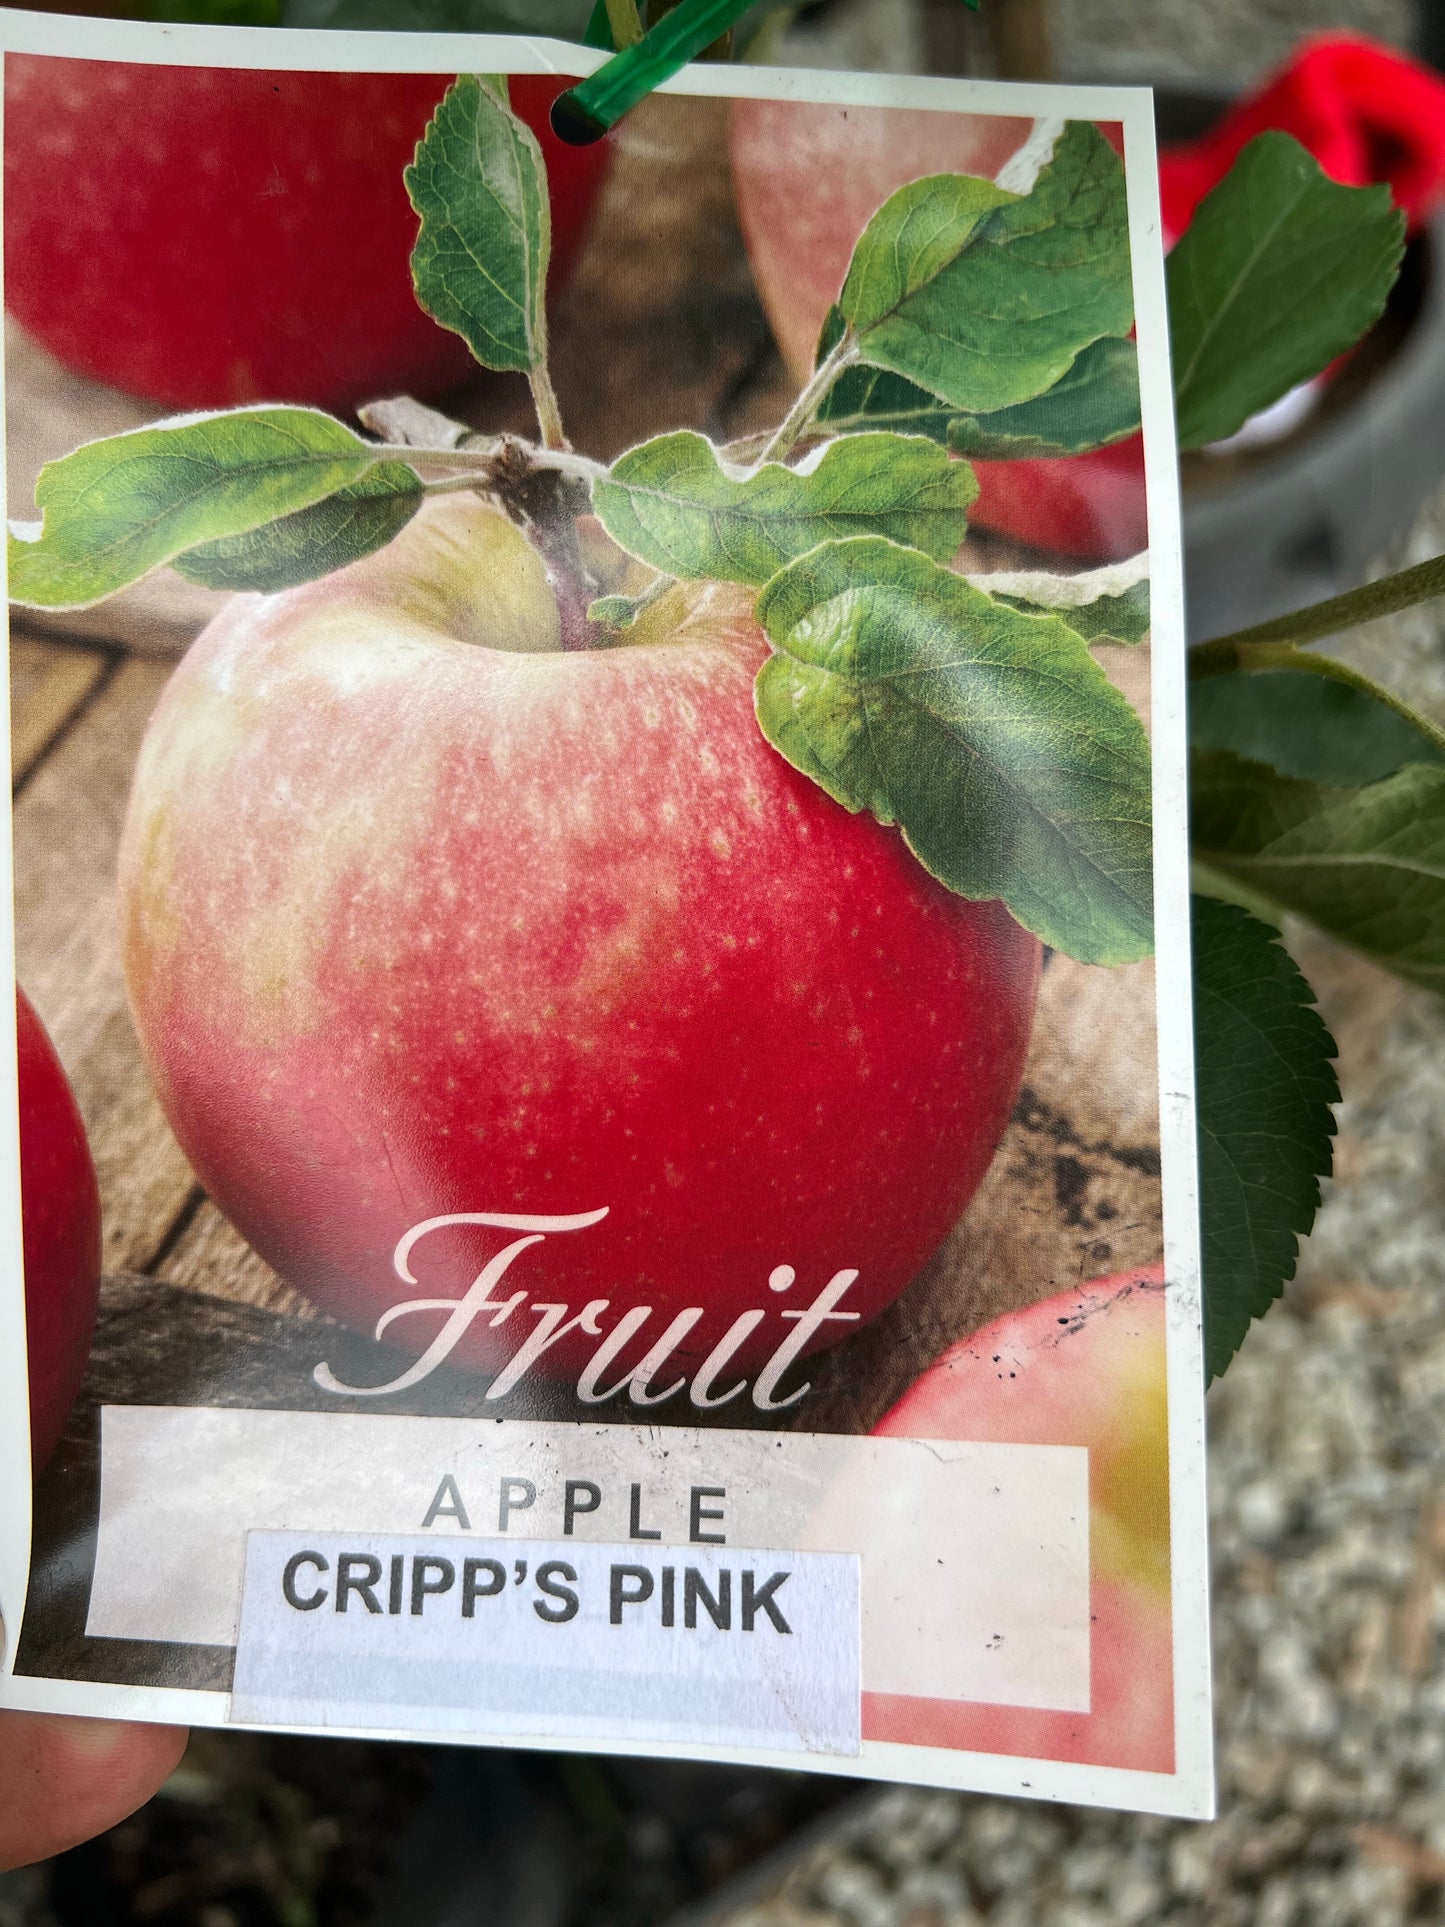 Apple - Pink Lady / Cripps Pink